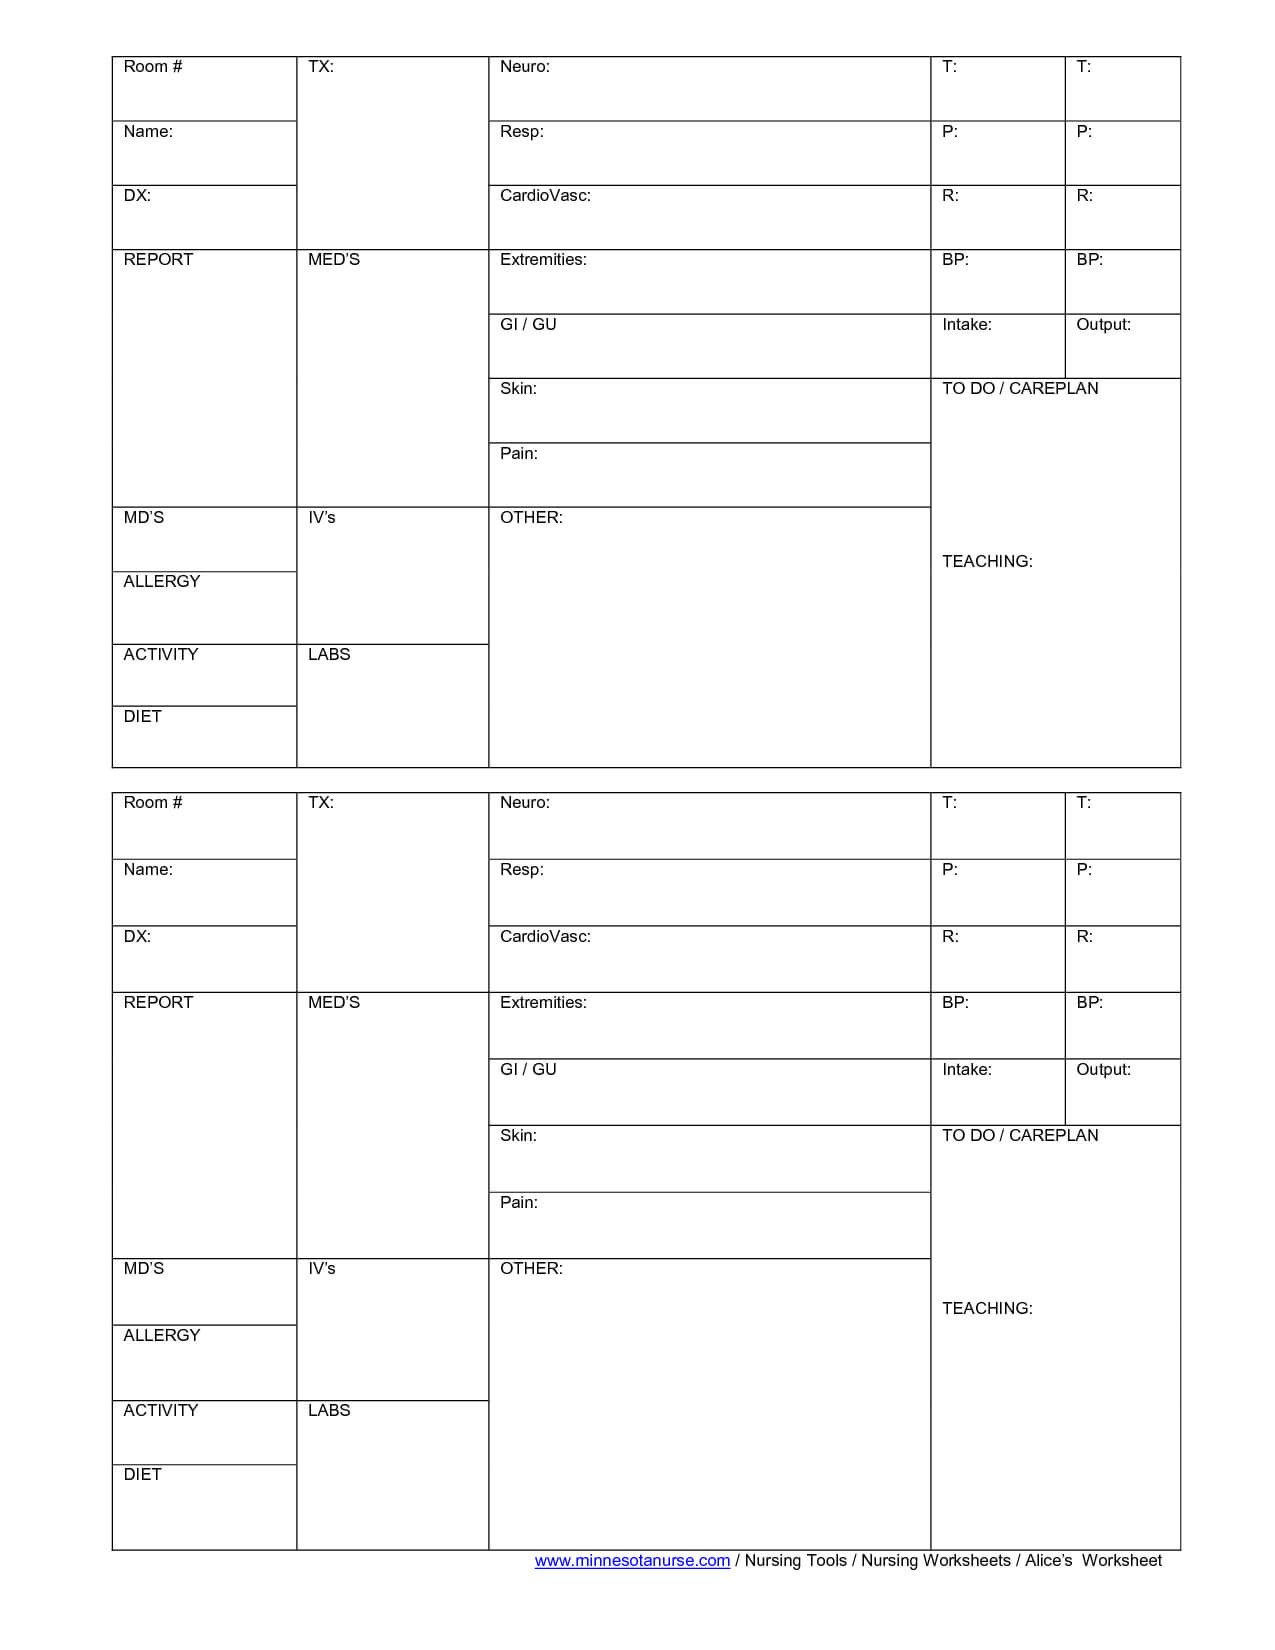 Blank Nursing Report Sheets For Newborns | Nursing Patient In Nursing Report Sheet Template